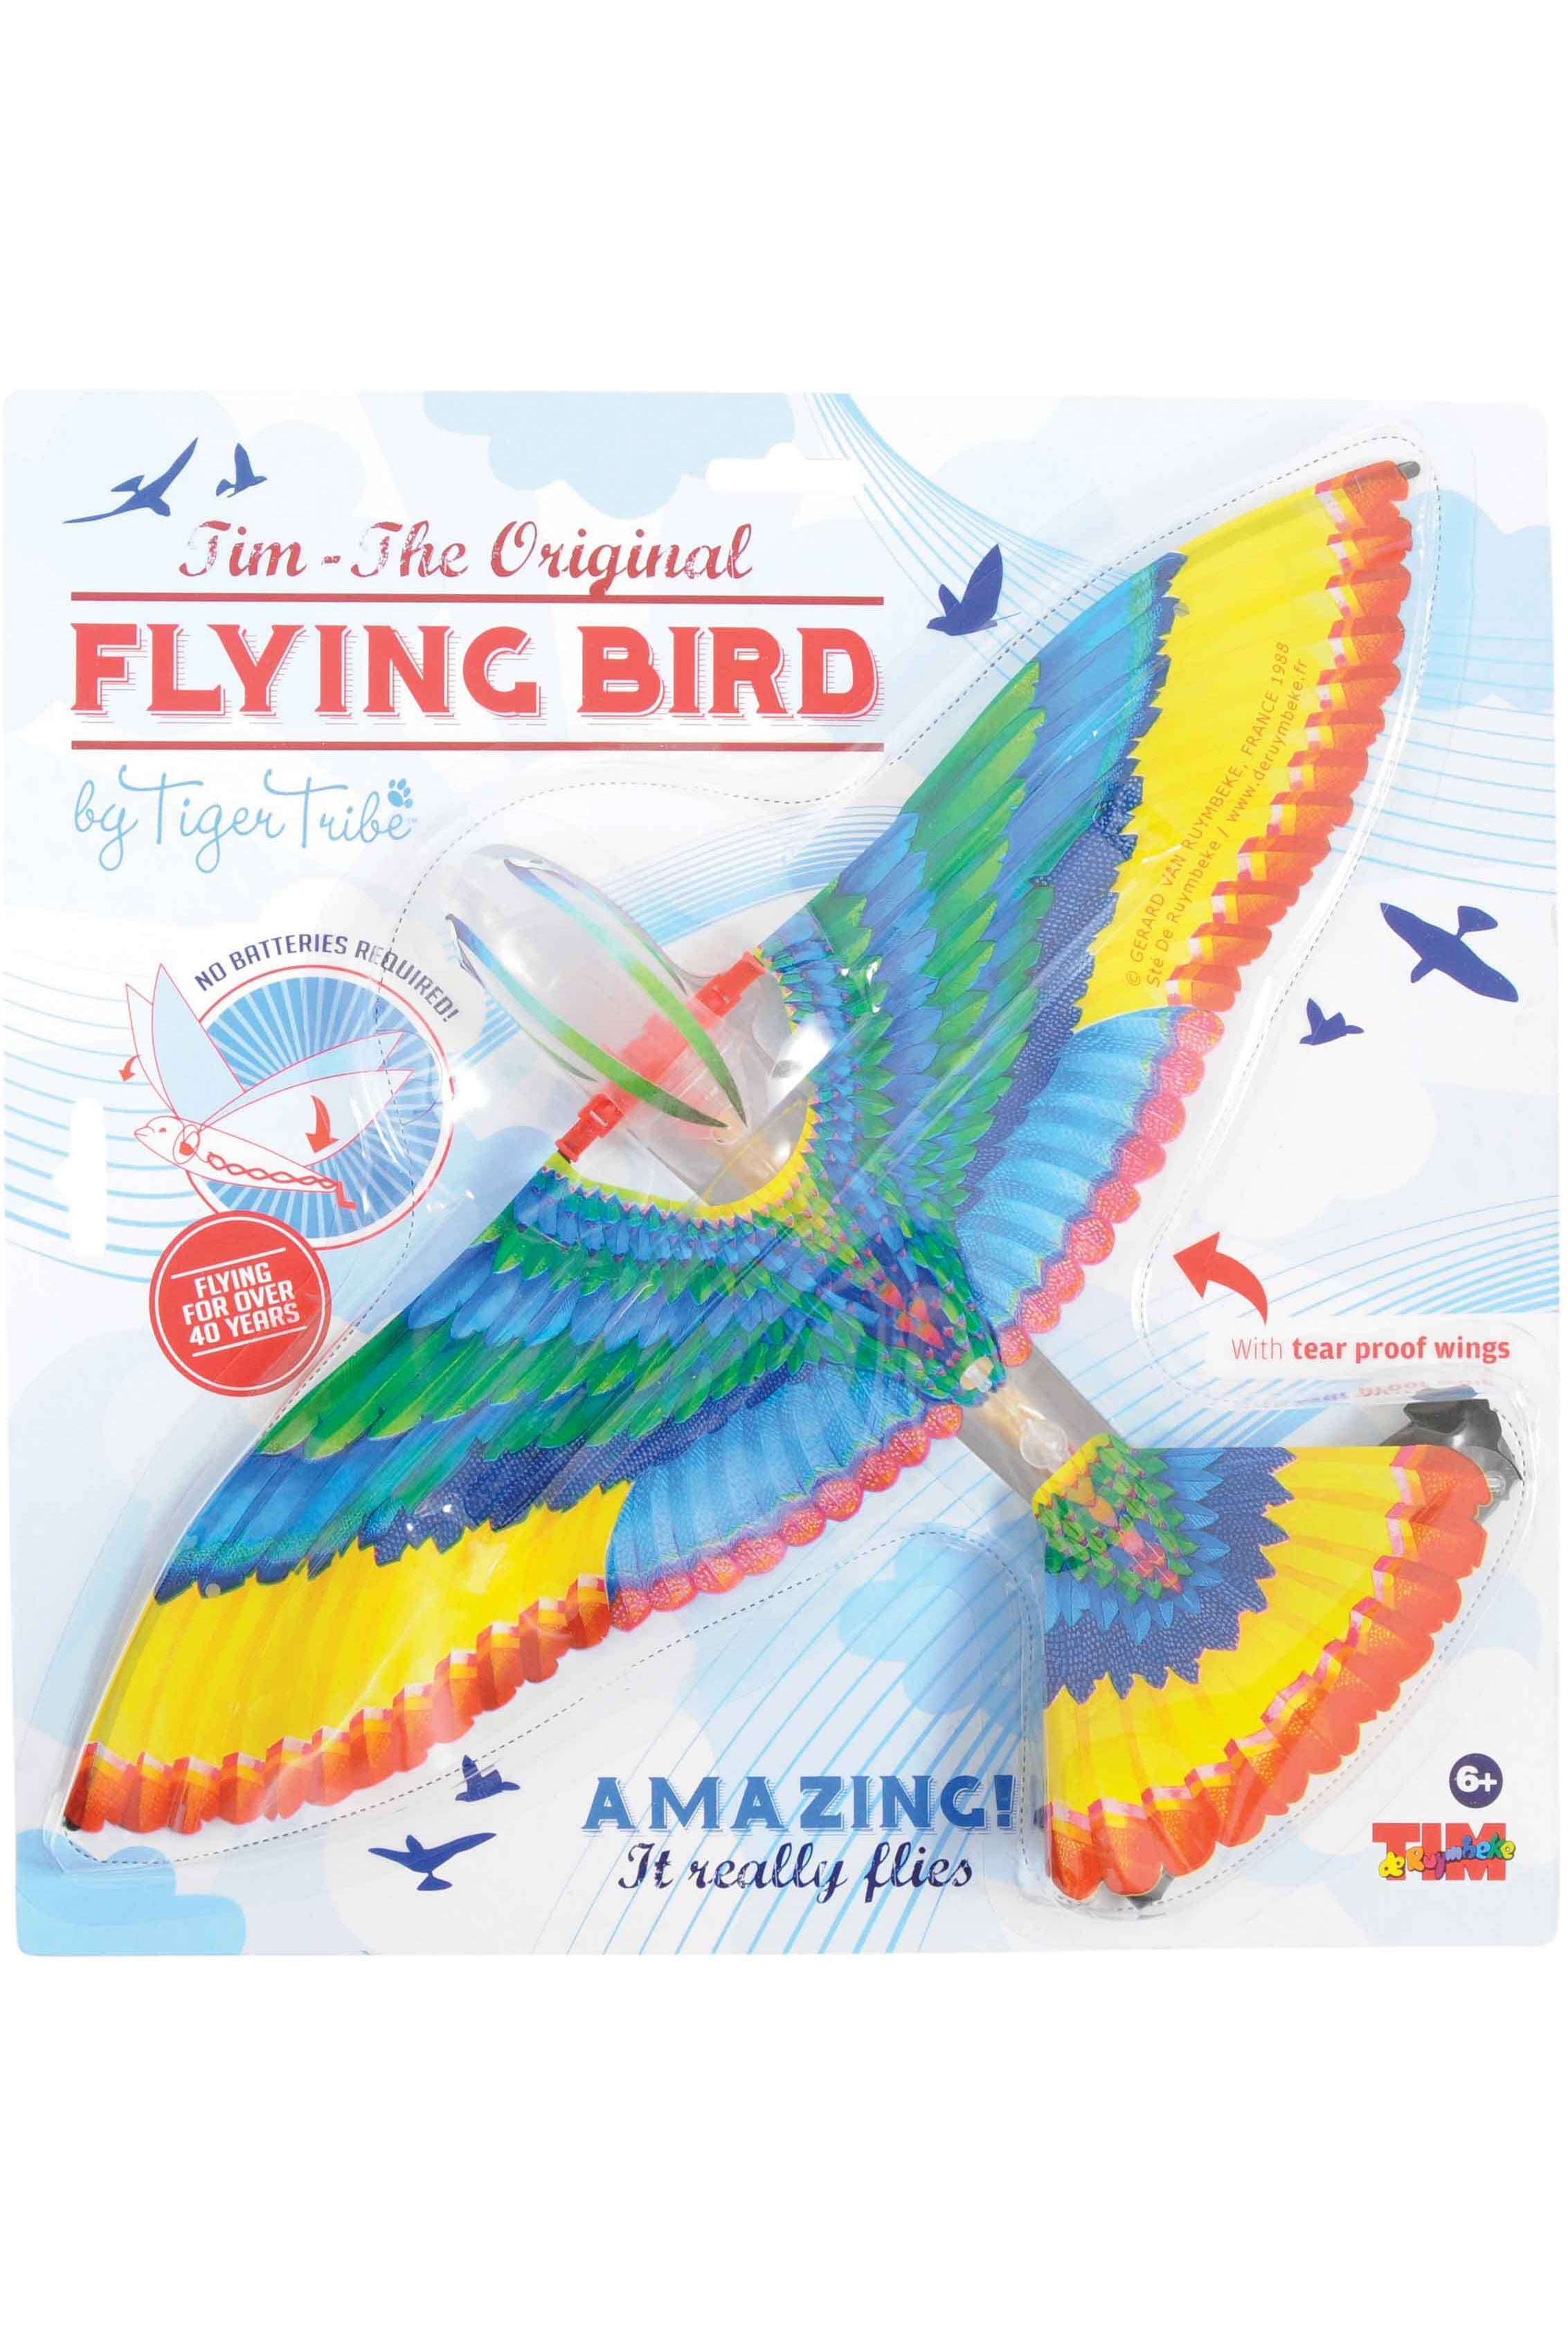 Tim - The Original Flying Bird